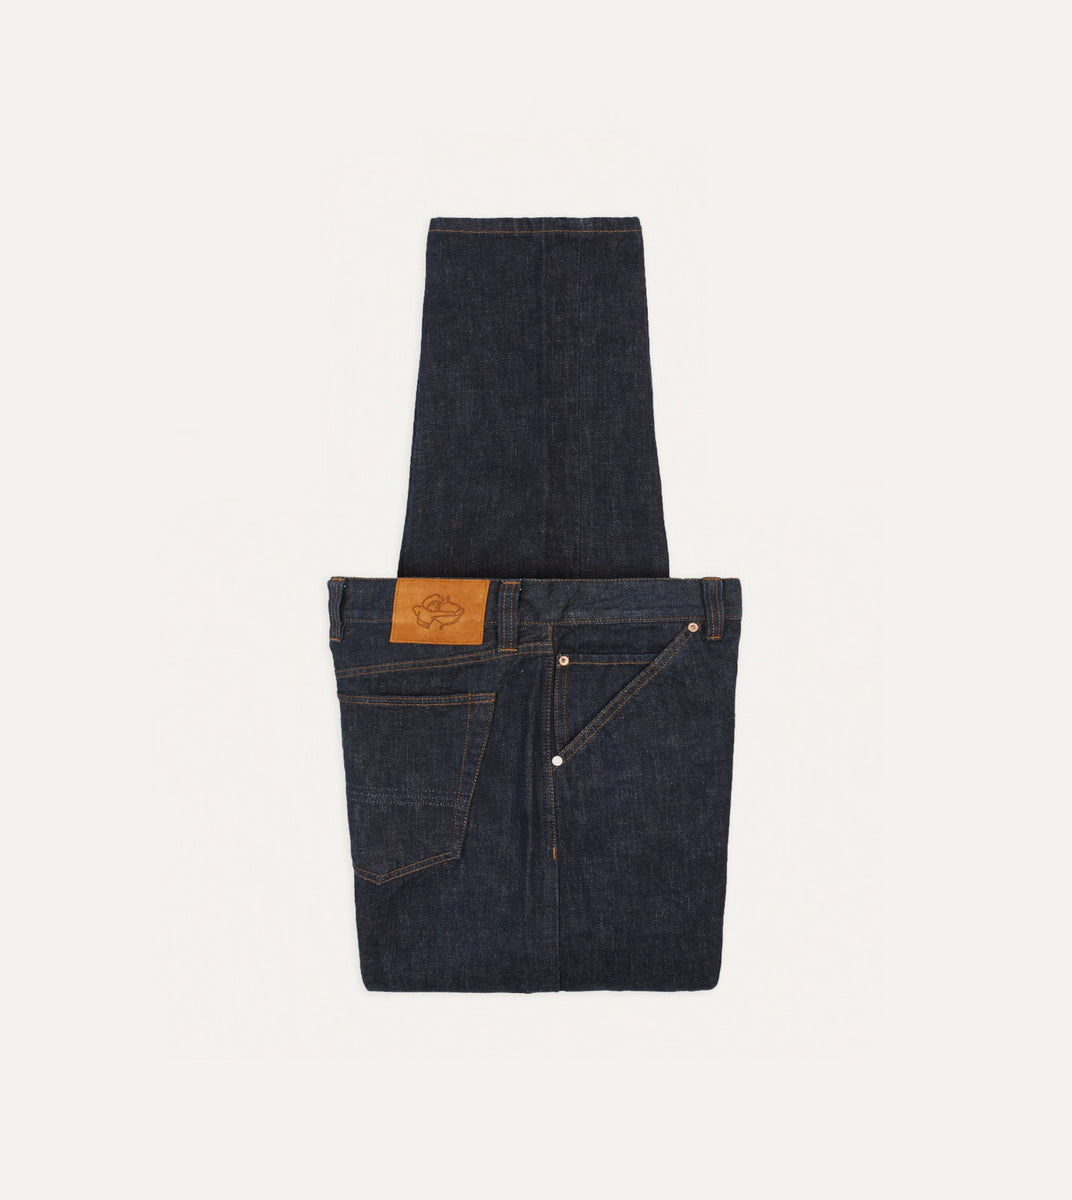 Indigo Rinse 14.2oz Japanese Selvedge Denim Five-Pocket Jeans